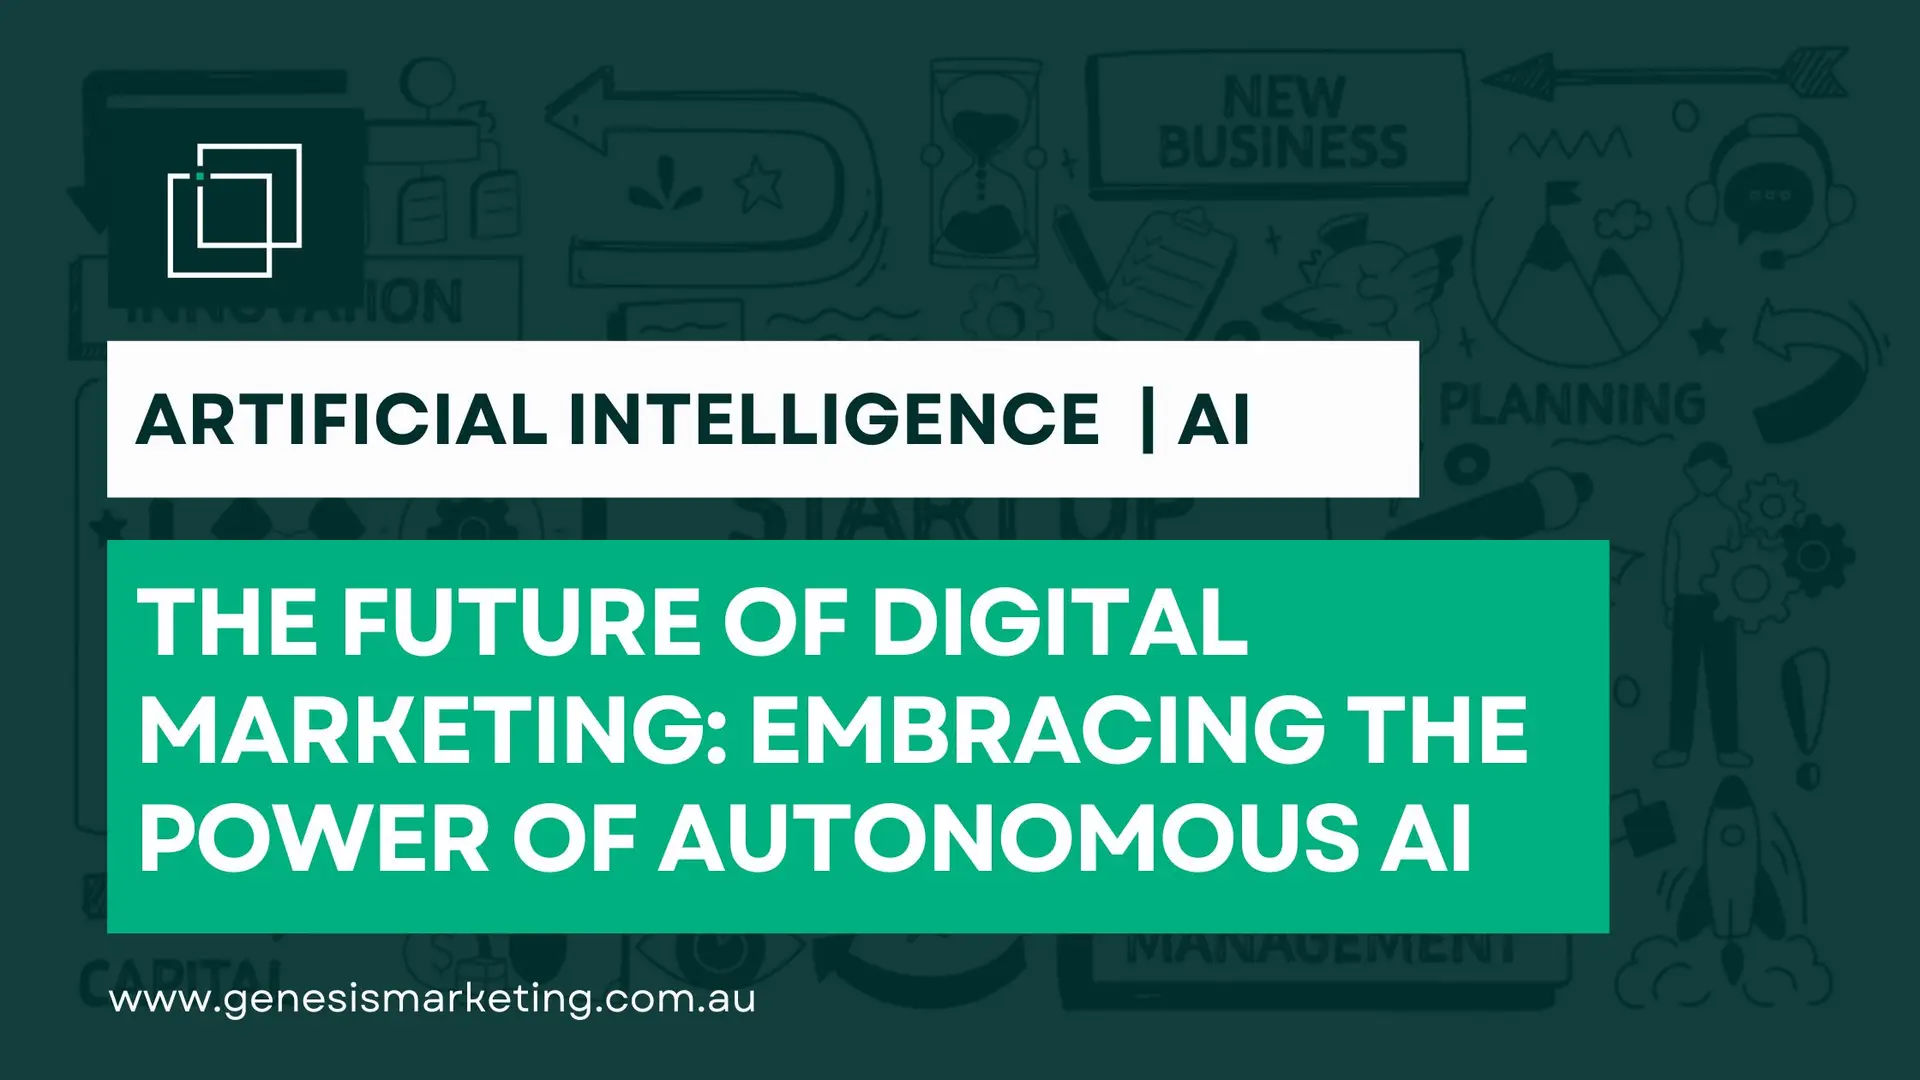 The Future of Digital Marketing: Embracing the Power of Autonomous AI